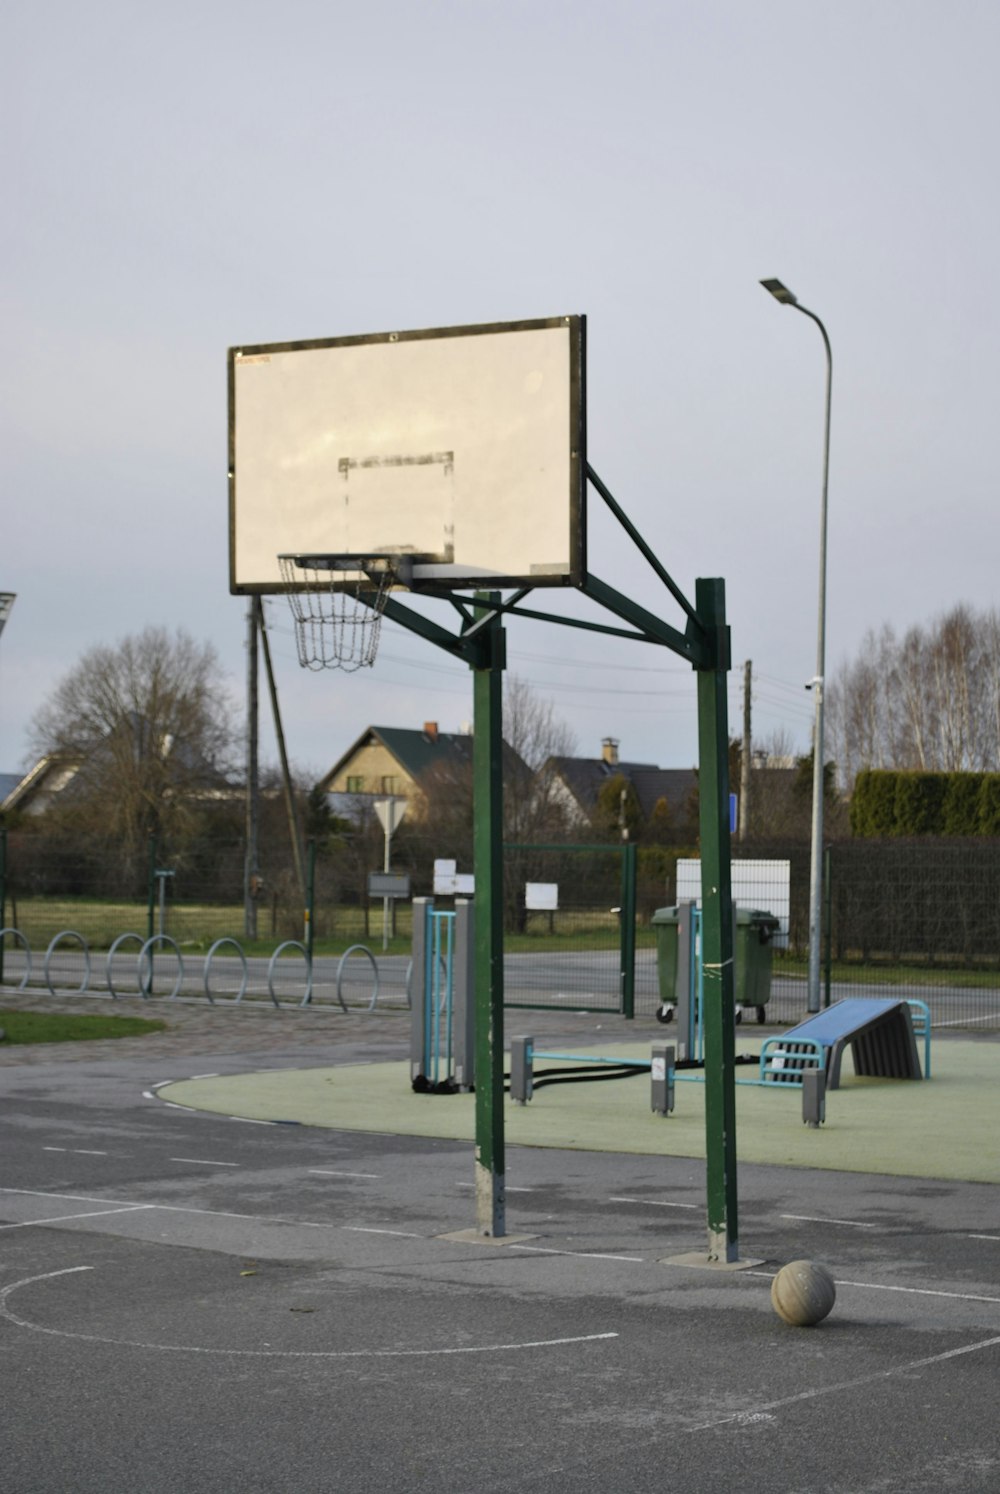 un terrain de basket vide avec un panier de basket-ball